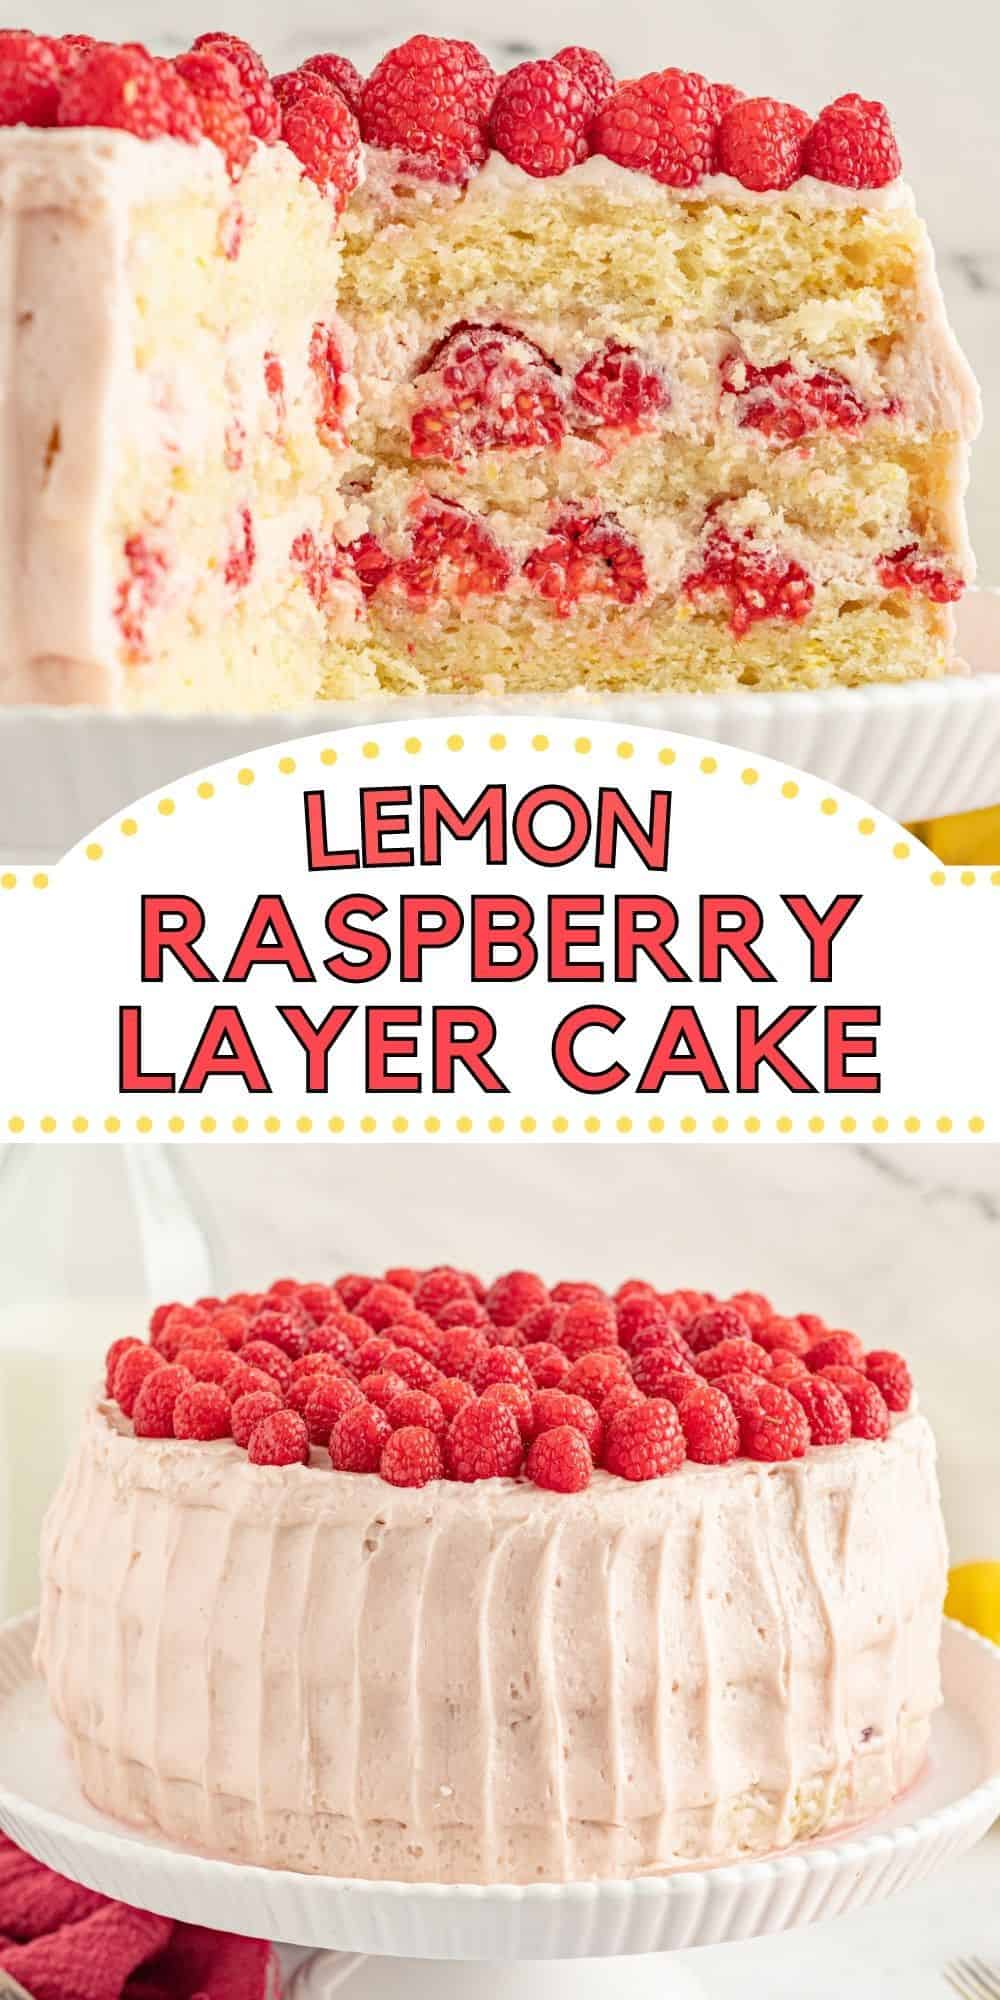 Lemon Raspberry Layer Cake Pinterest Image.